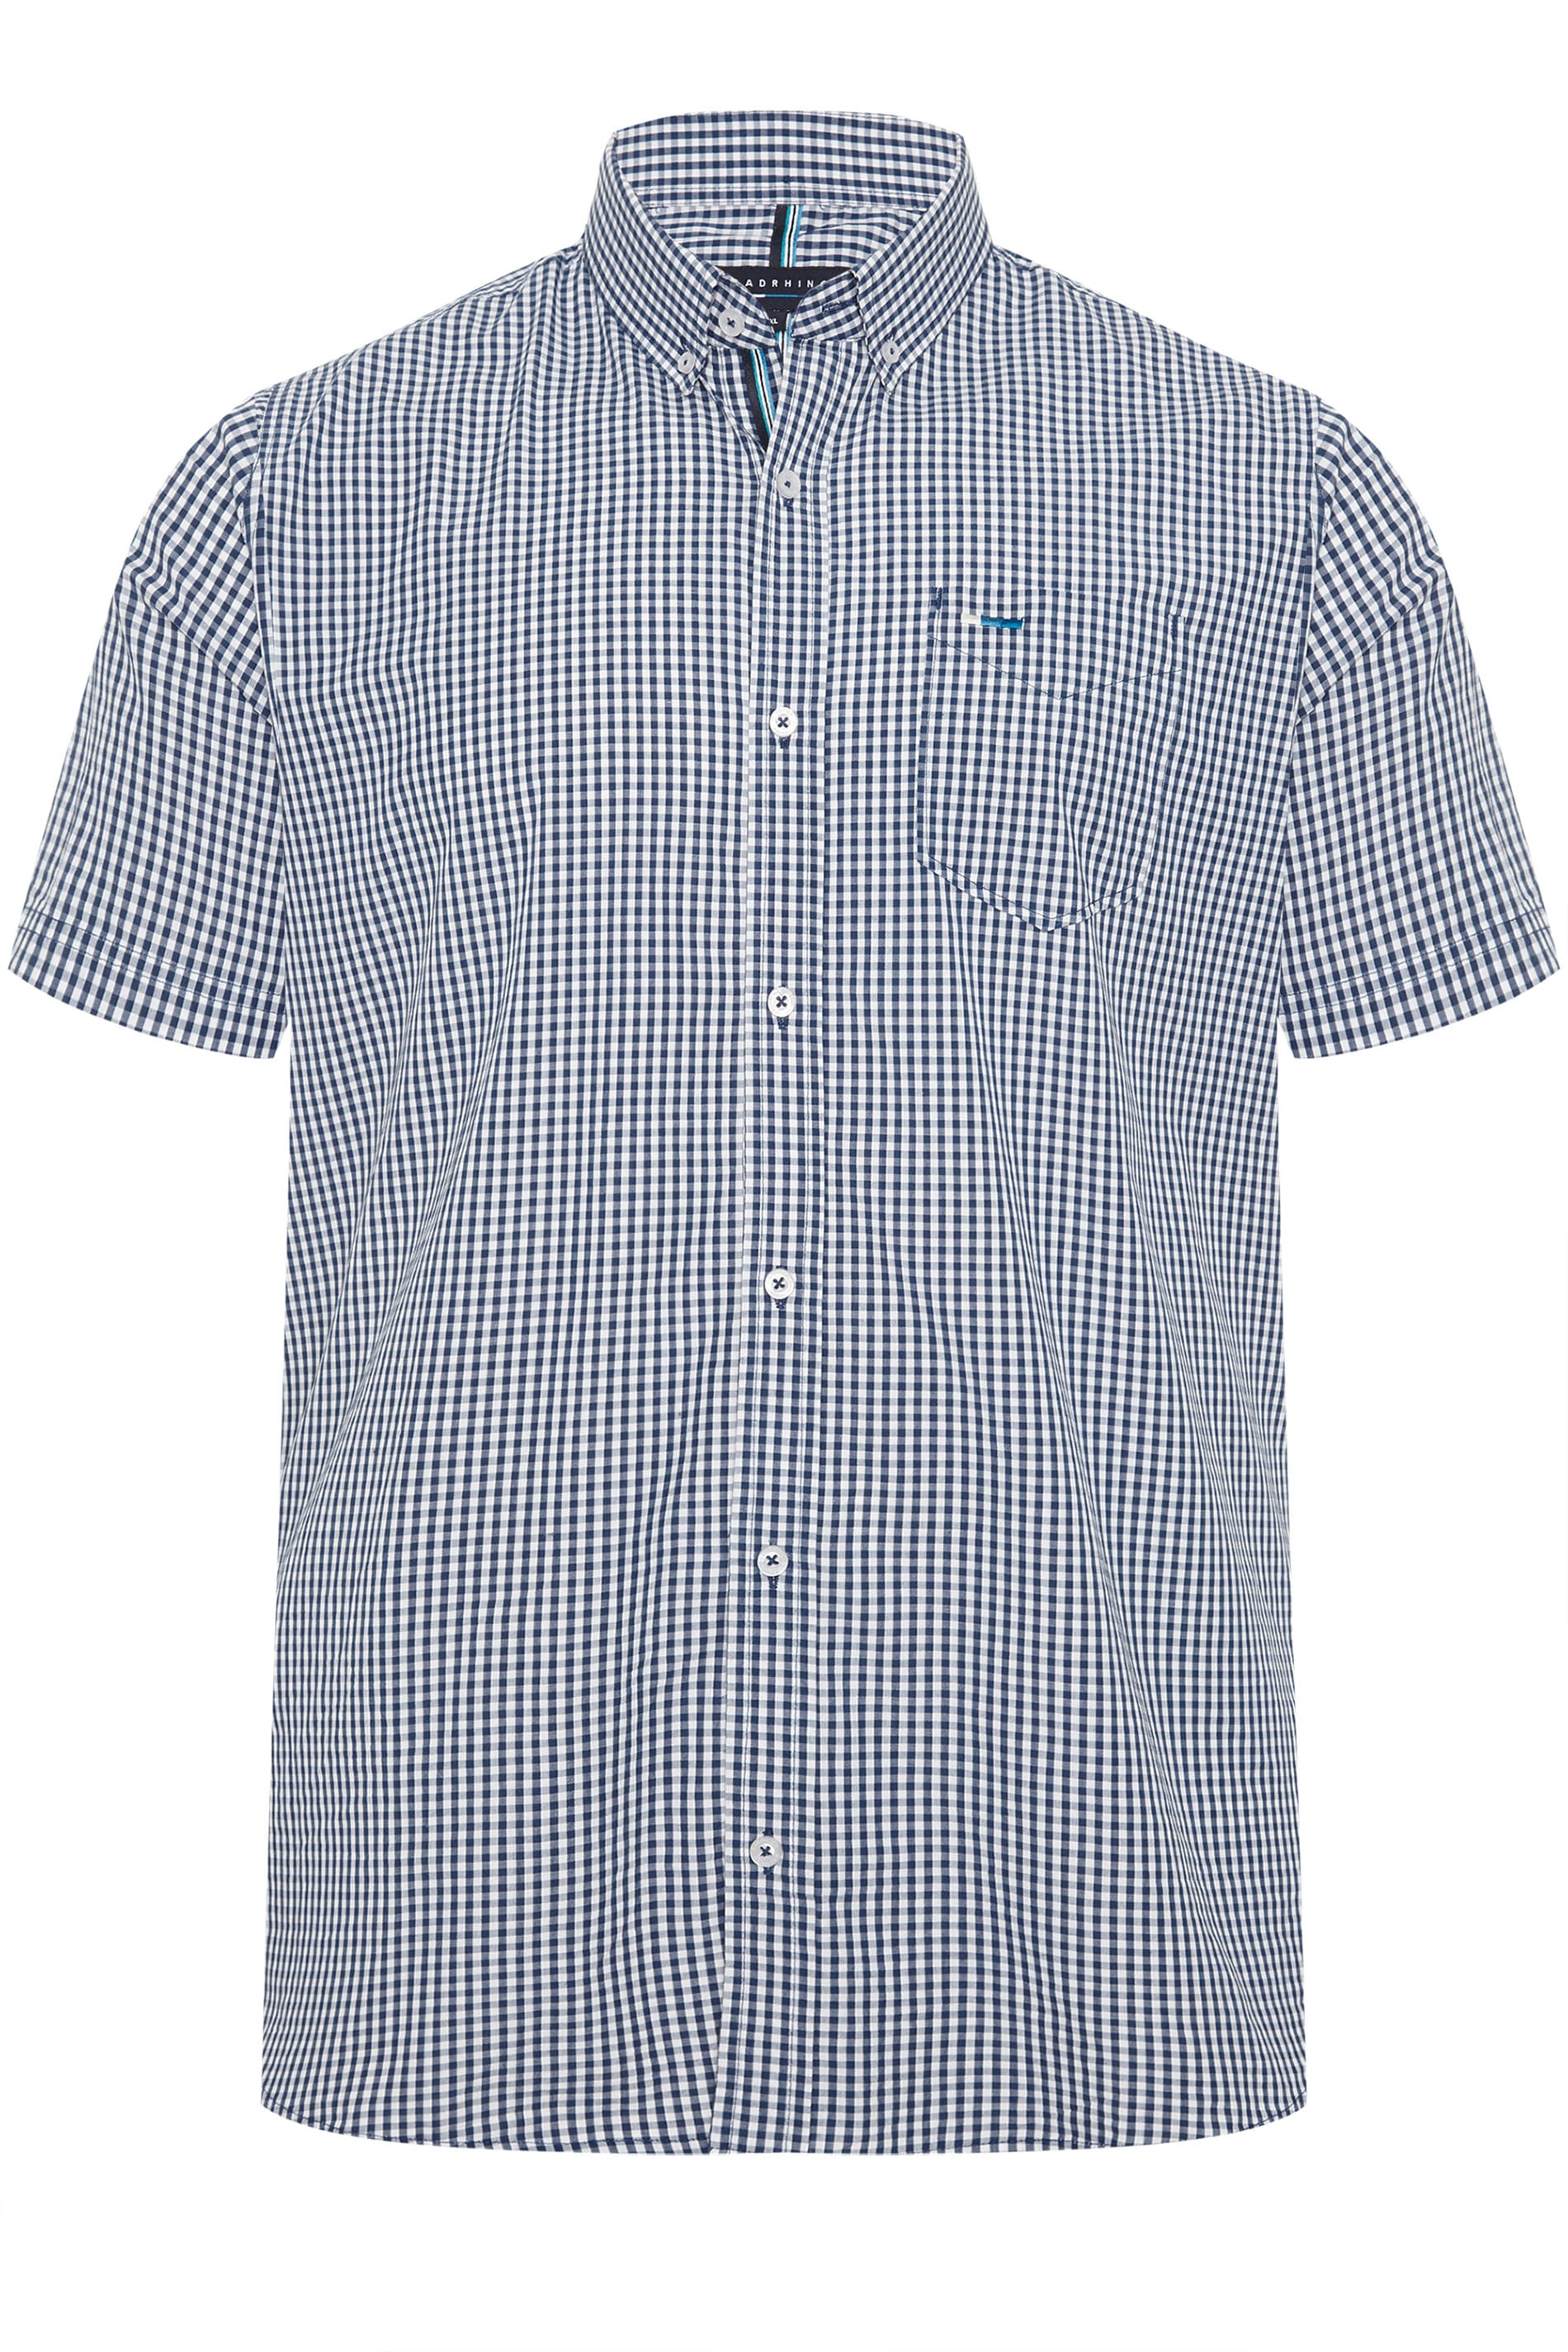 BadRhino Big & Tall Navy Blue Short Sleeve Gingham Shirt 1